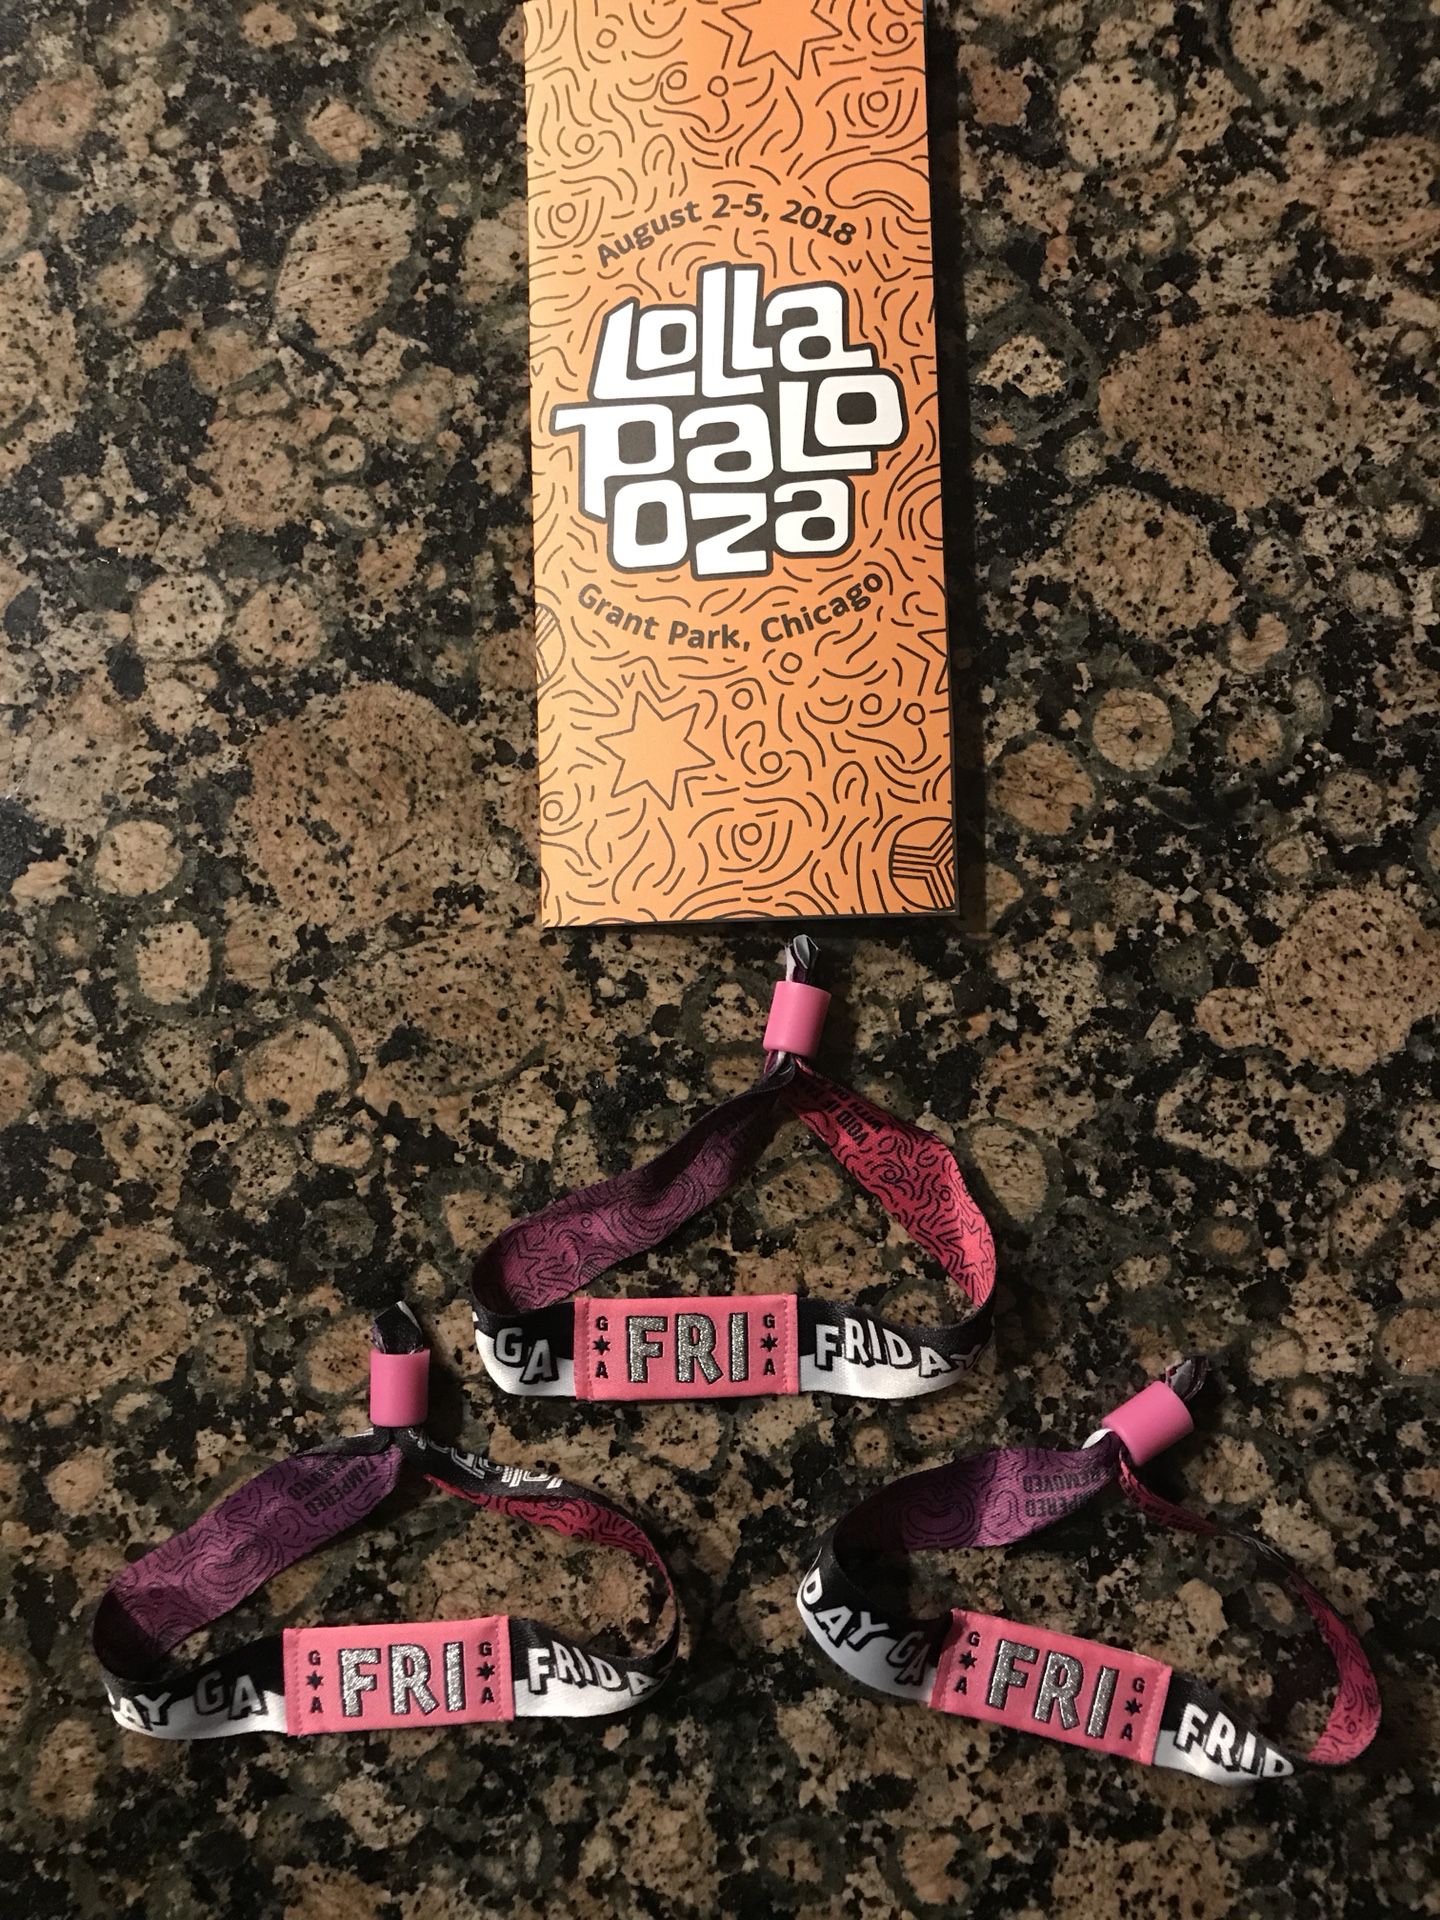 Friday Lollapalooza Wristbands!